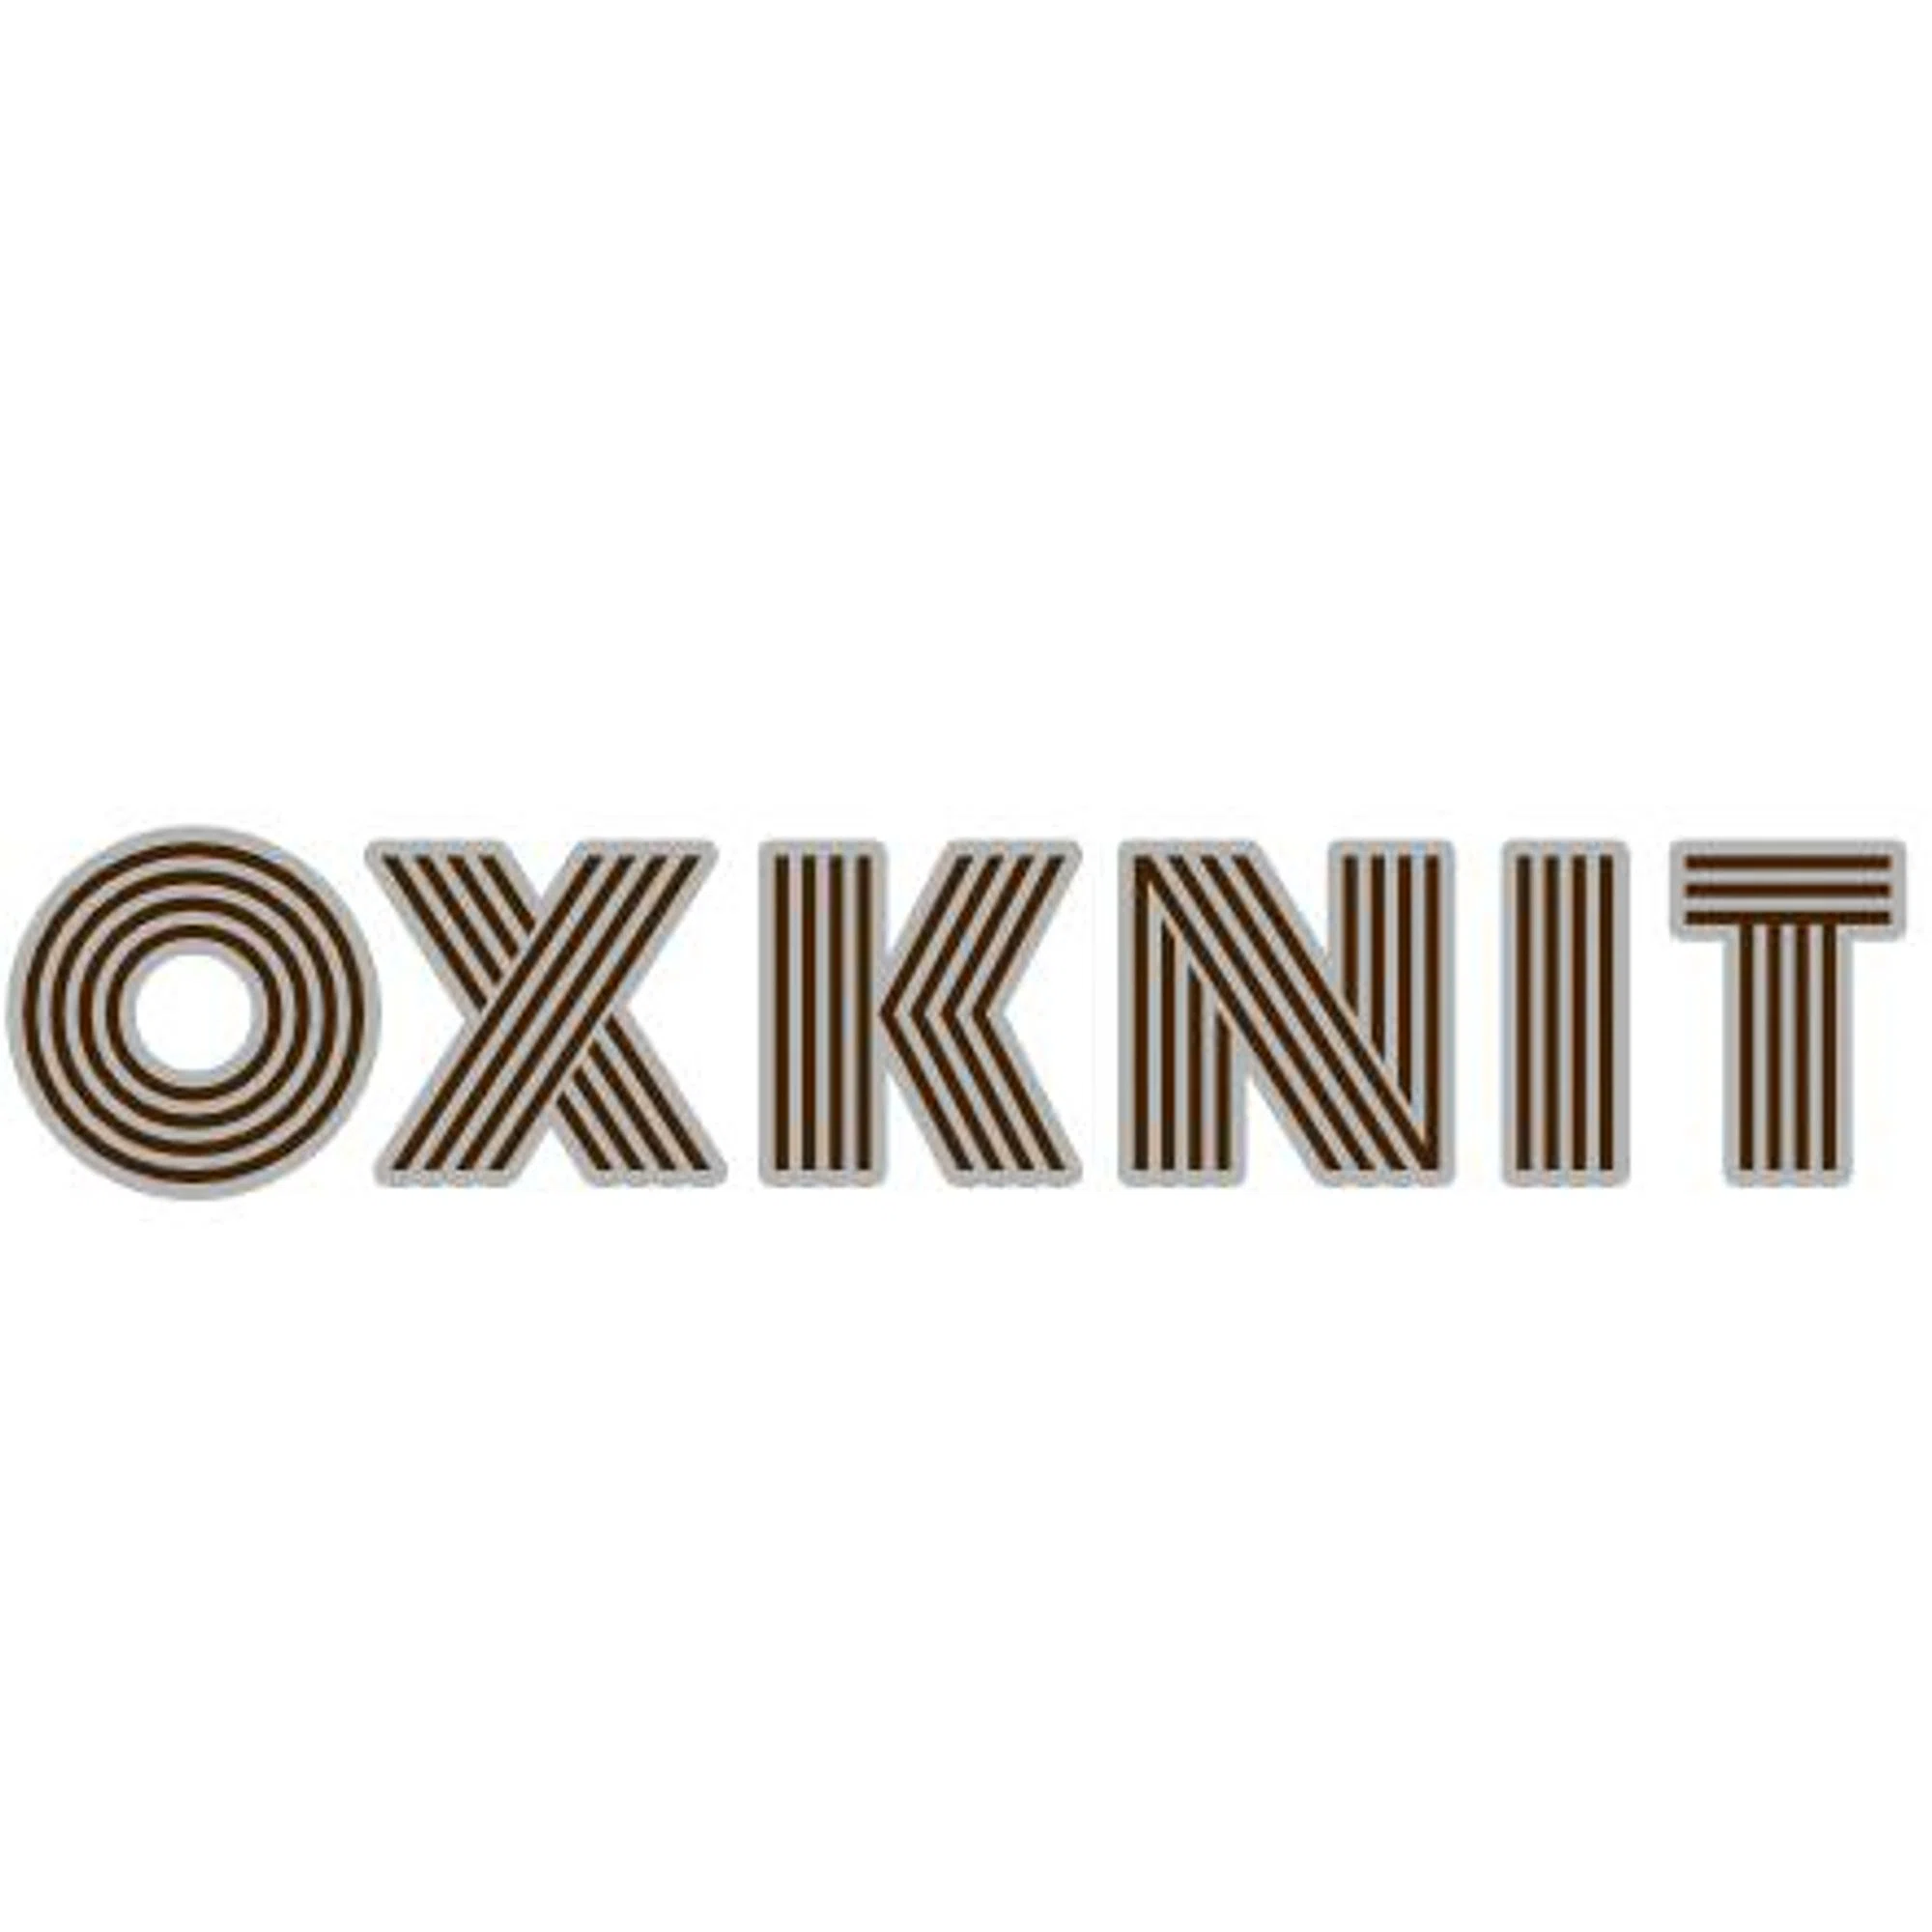 OXKnit Apparel